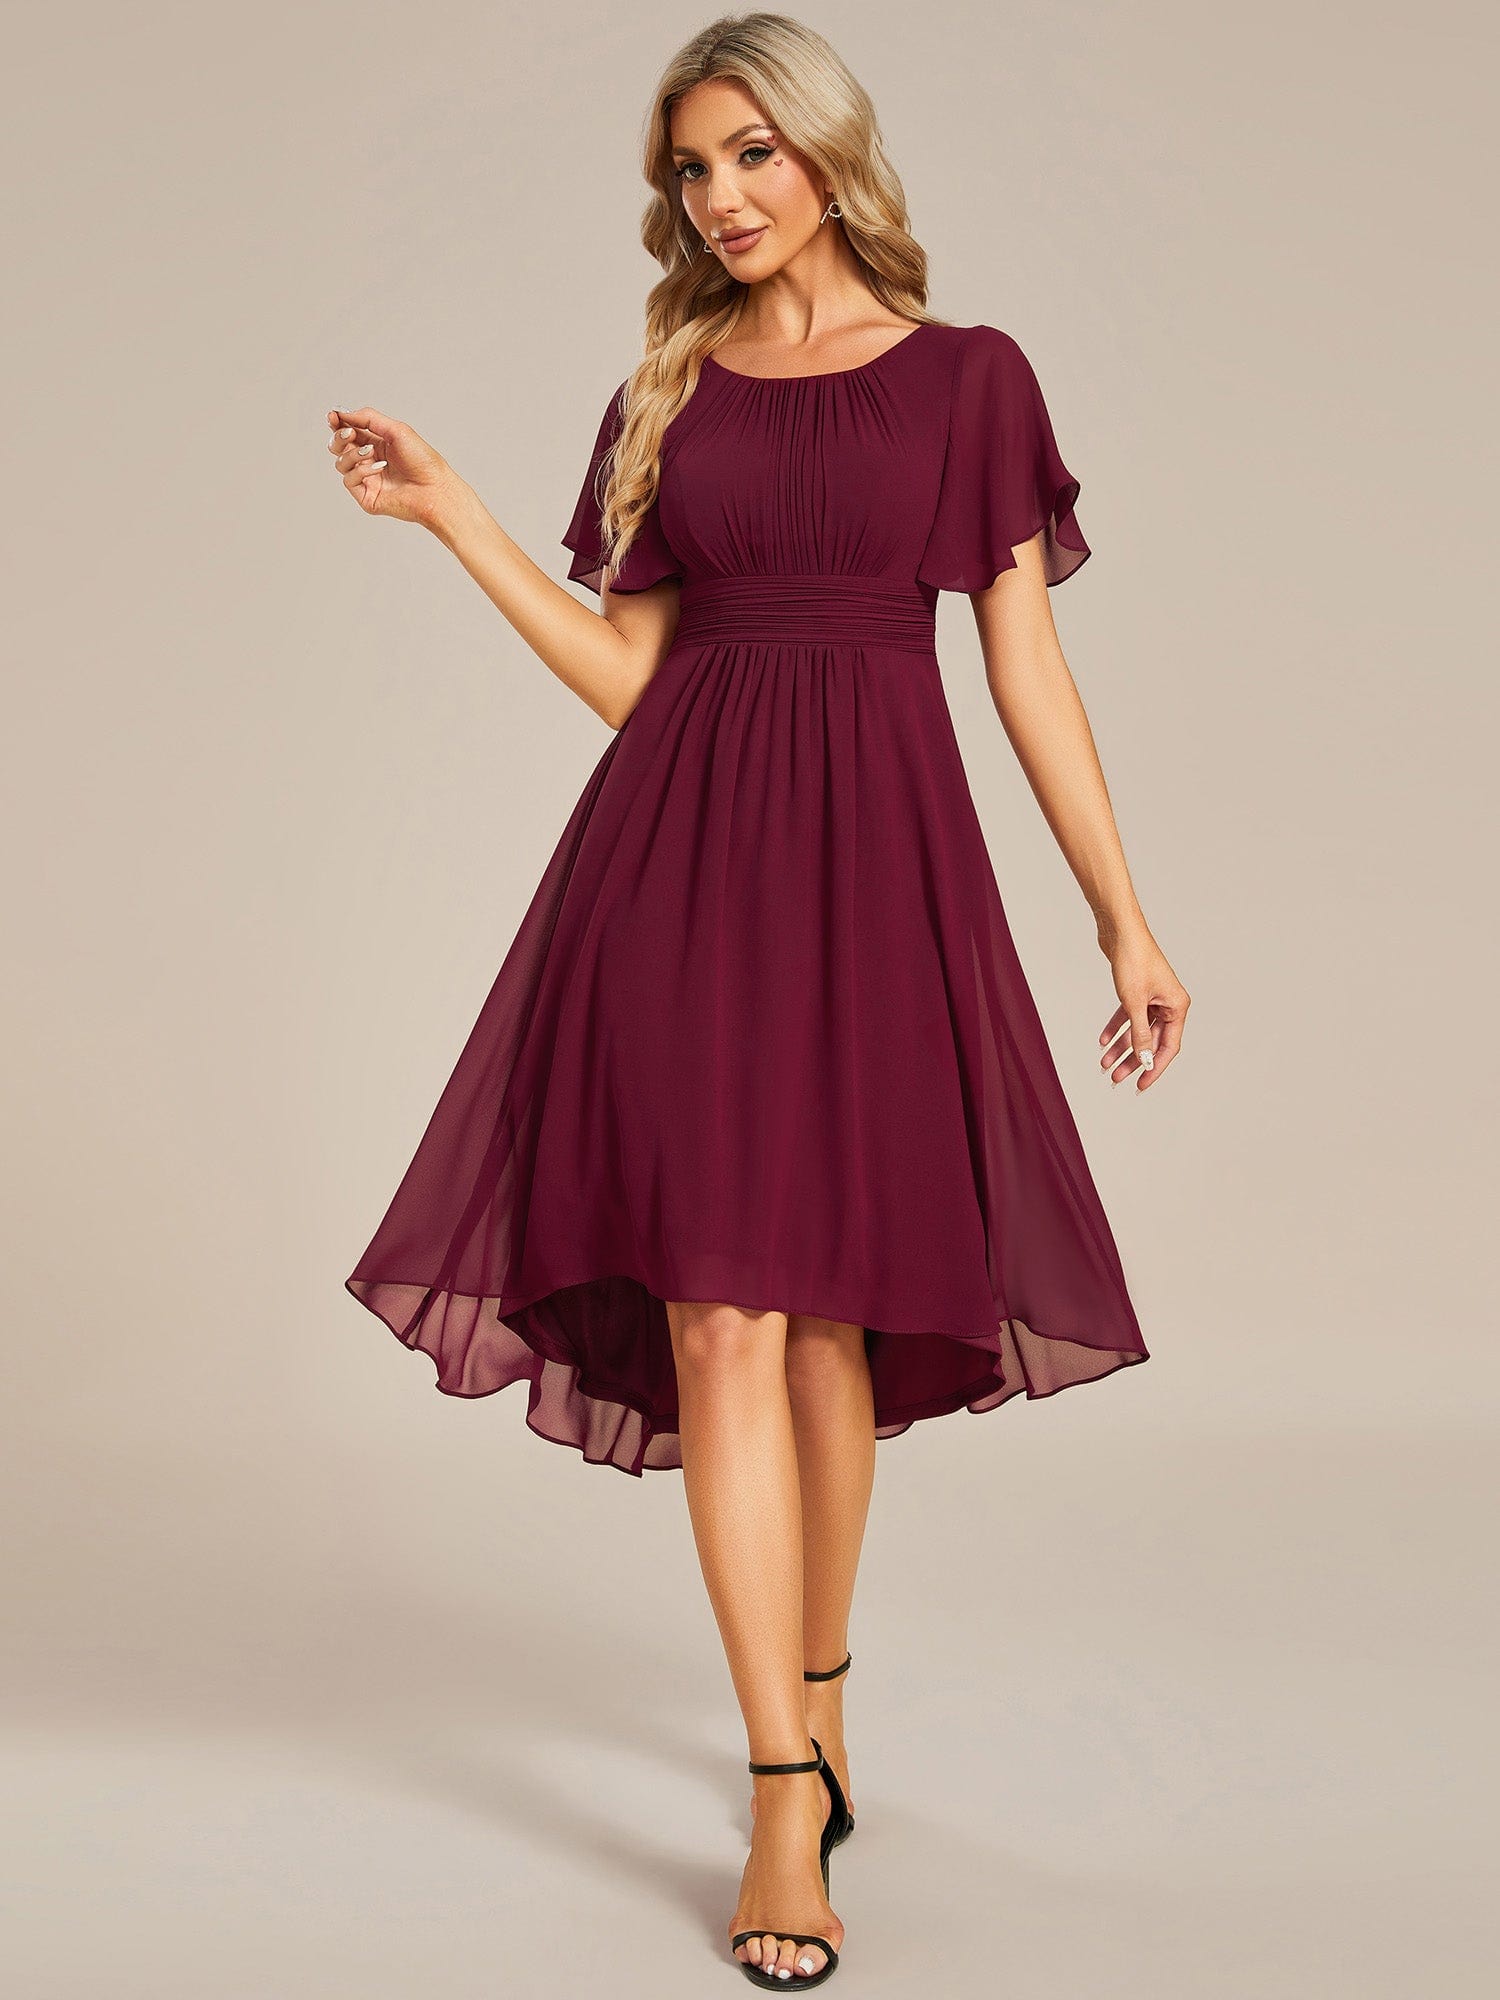 Flowy Chiffon Round Neckline A-Line Knee Length Wedding Guest Dress #color_Burgundy